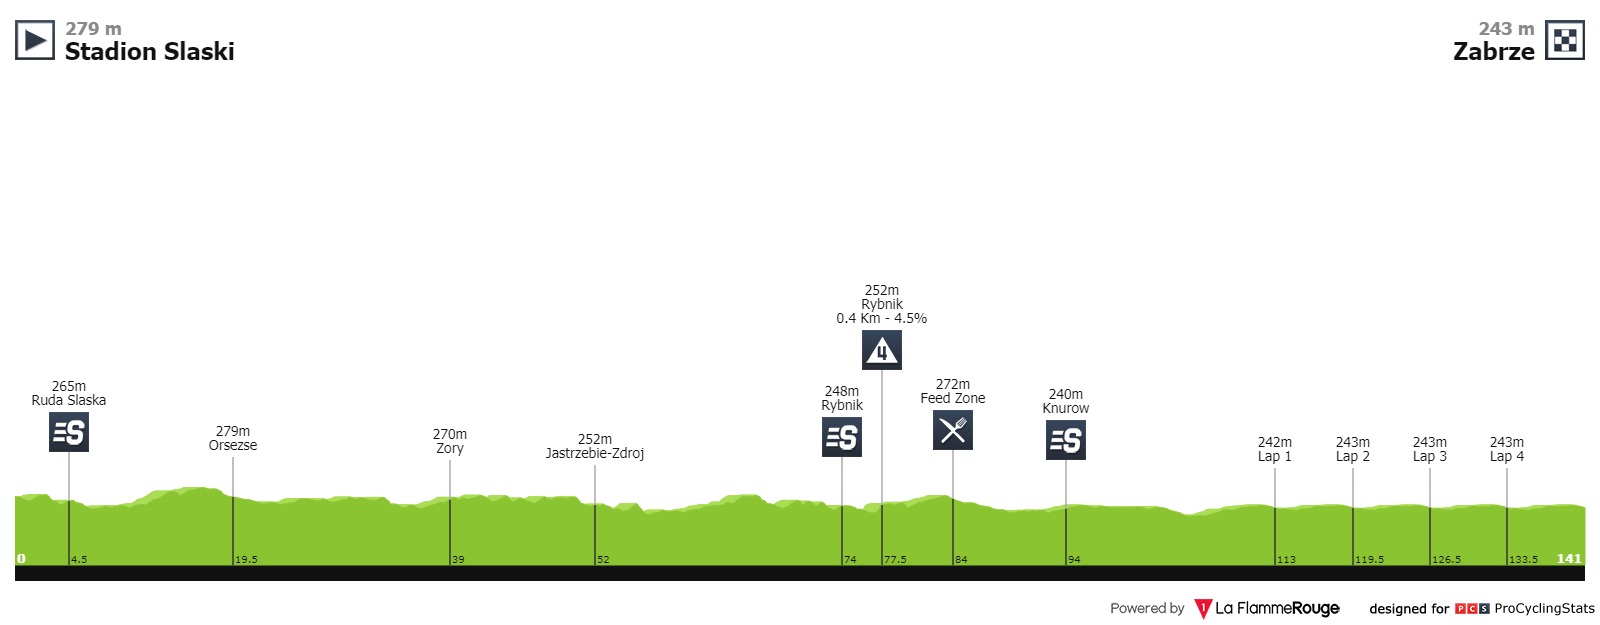 tour-de-pologne-2019-stage-3-profile-4f07c5e684.jpg